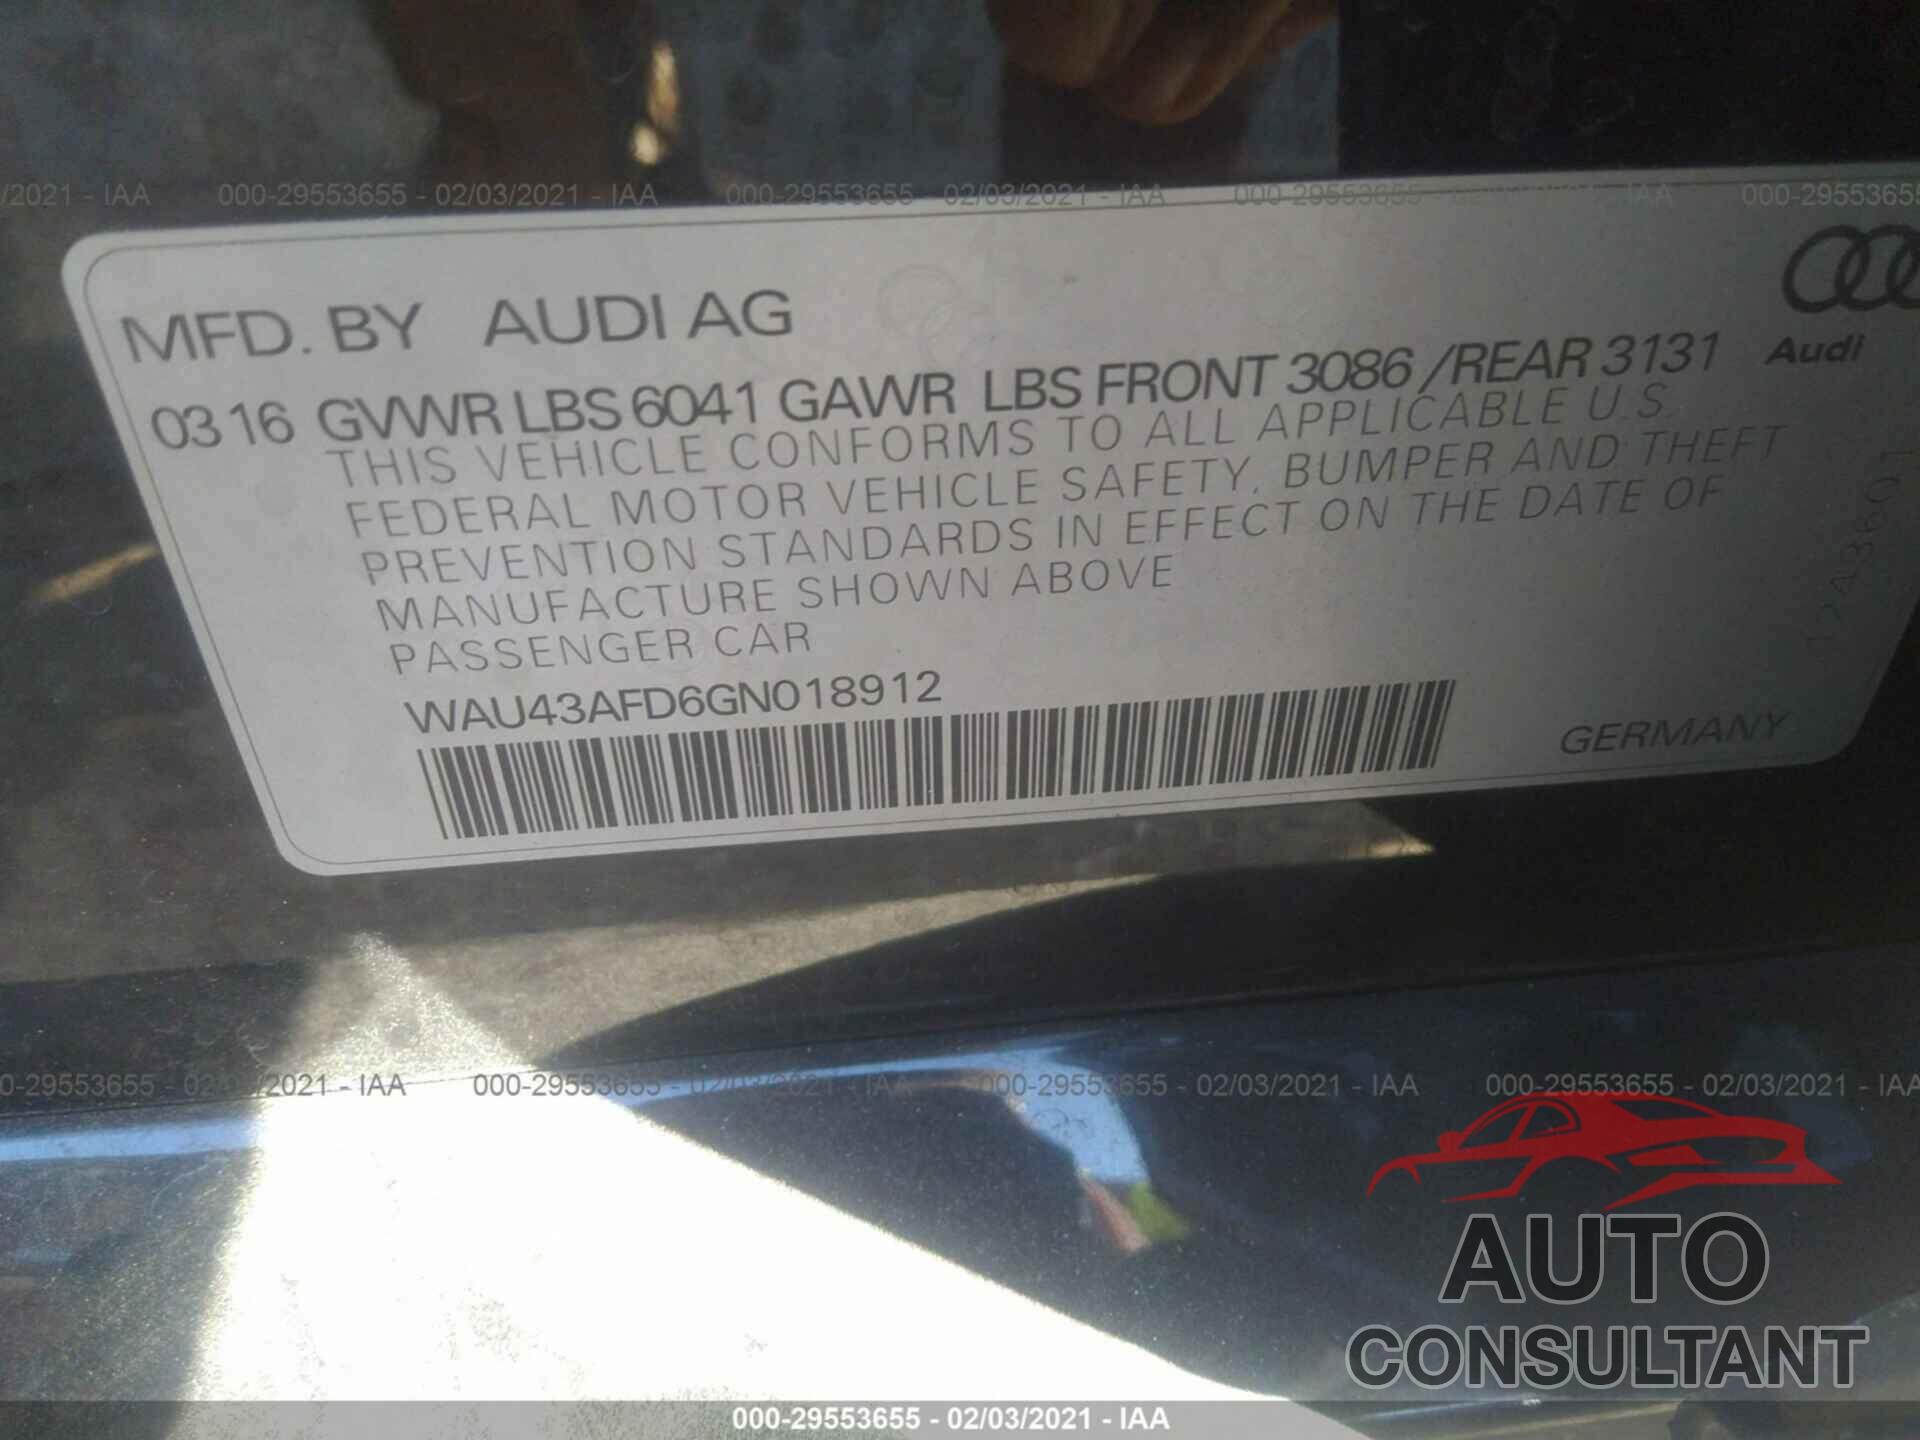 AUDI A8 L 2016 - WAU43AFD6GN018912